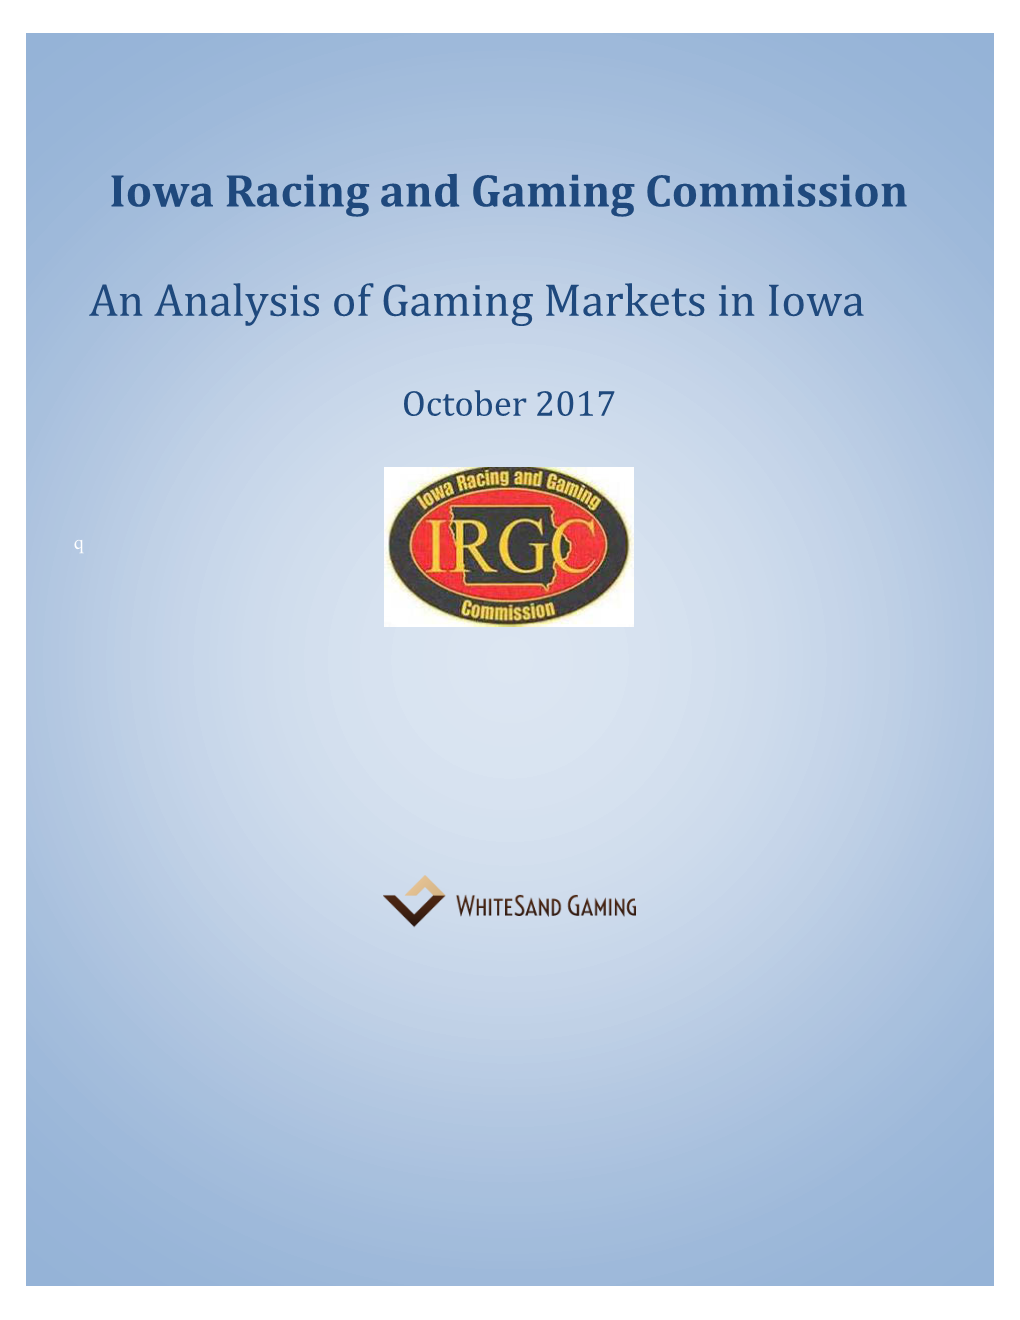 Iowa Gaming Market Analysis